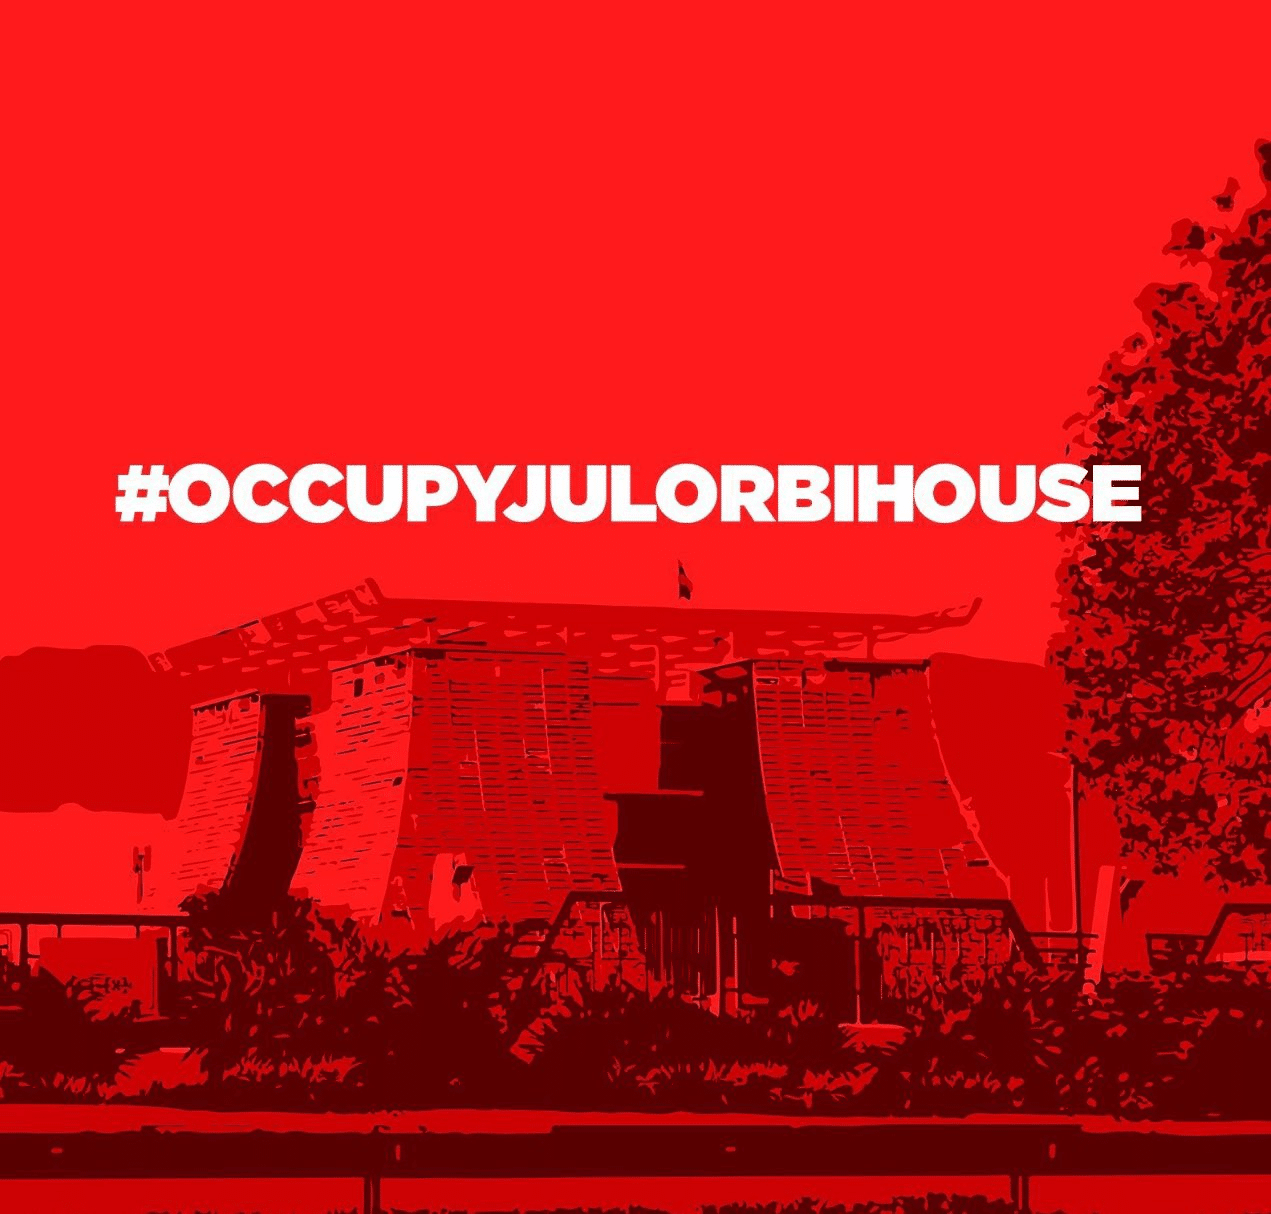 OccupyJulorbiHouseDemo